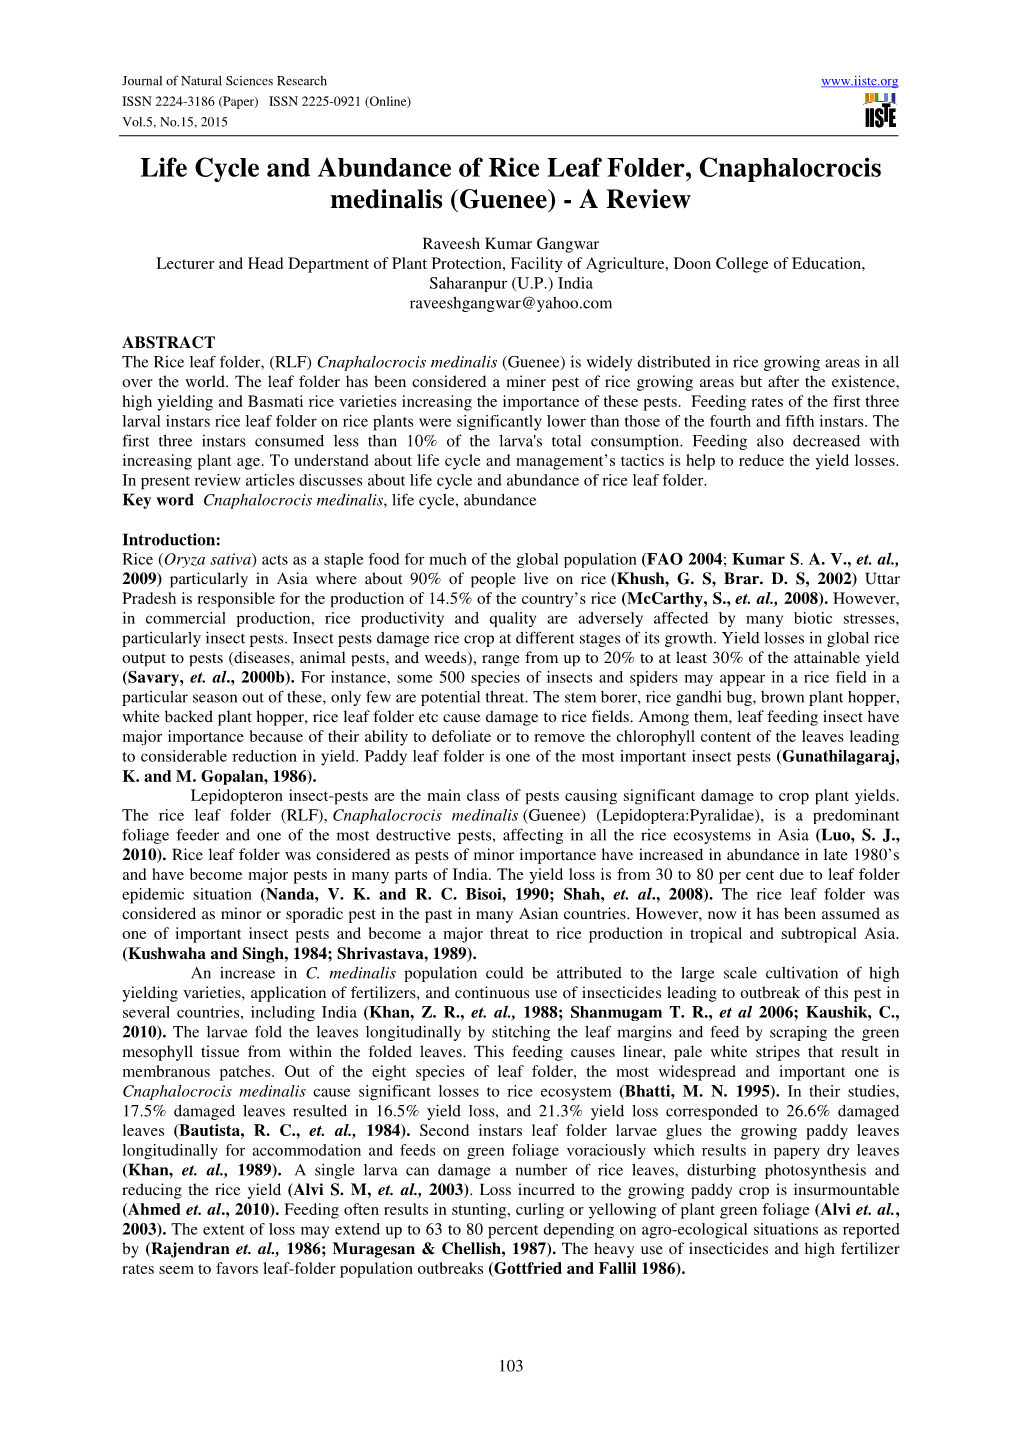 Life Cycle and Abundance of Rice Leaf Folder, Cnaphalocrocis Medinalis (Guenee) - a Review